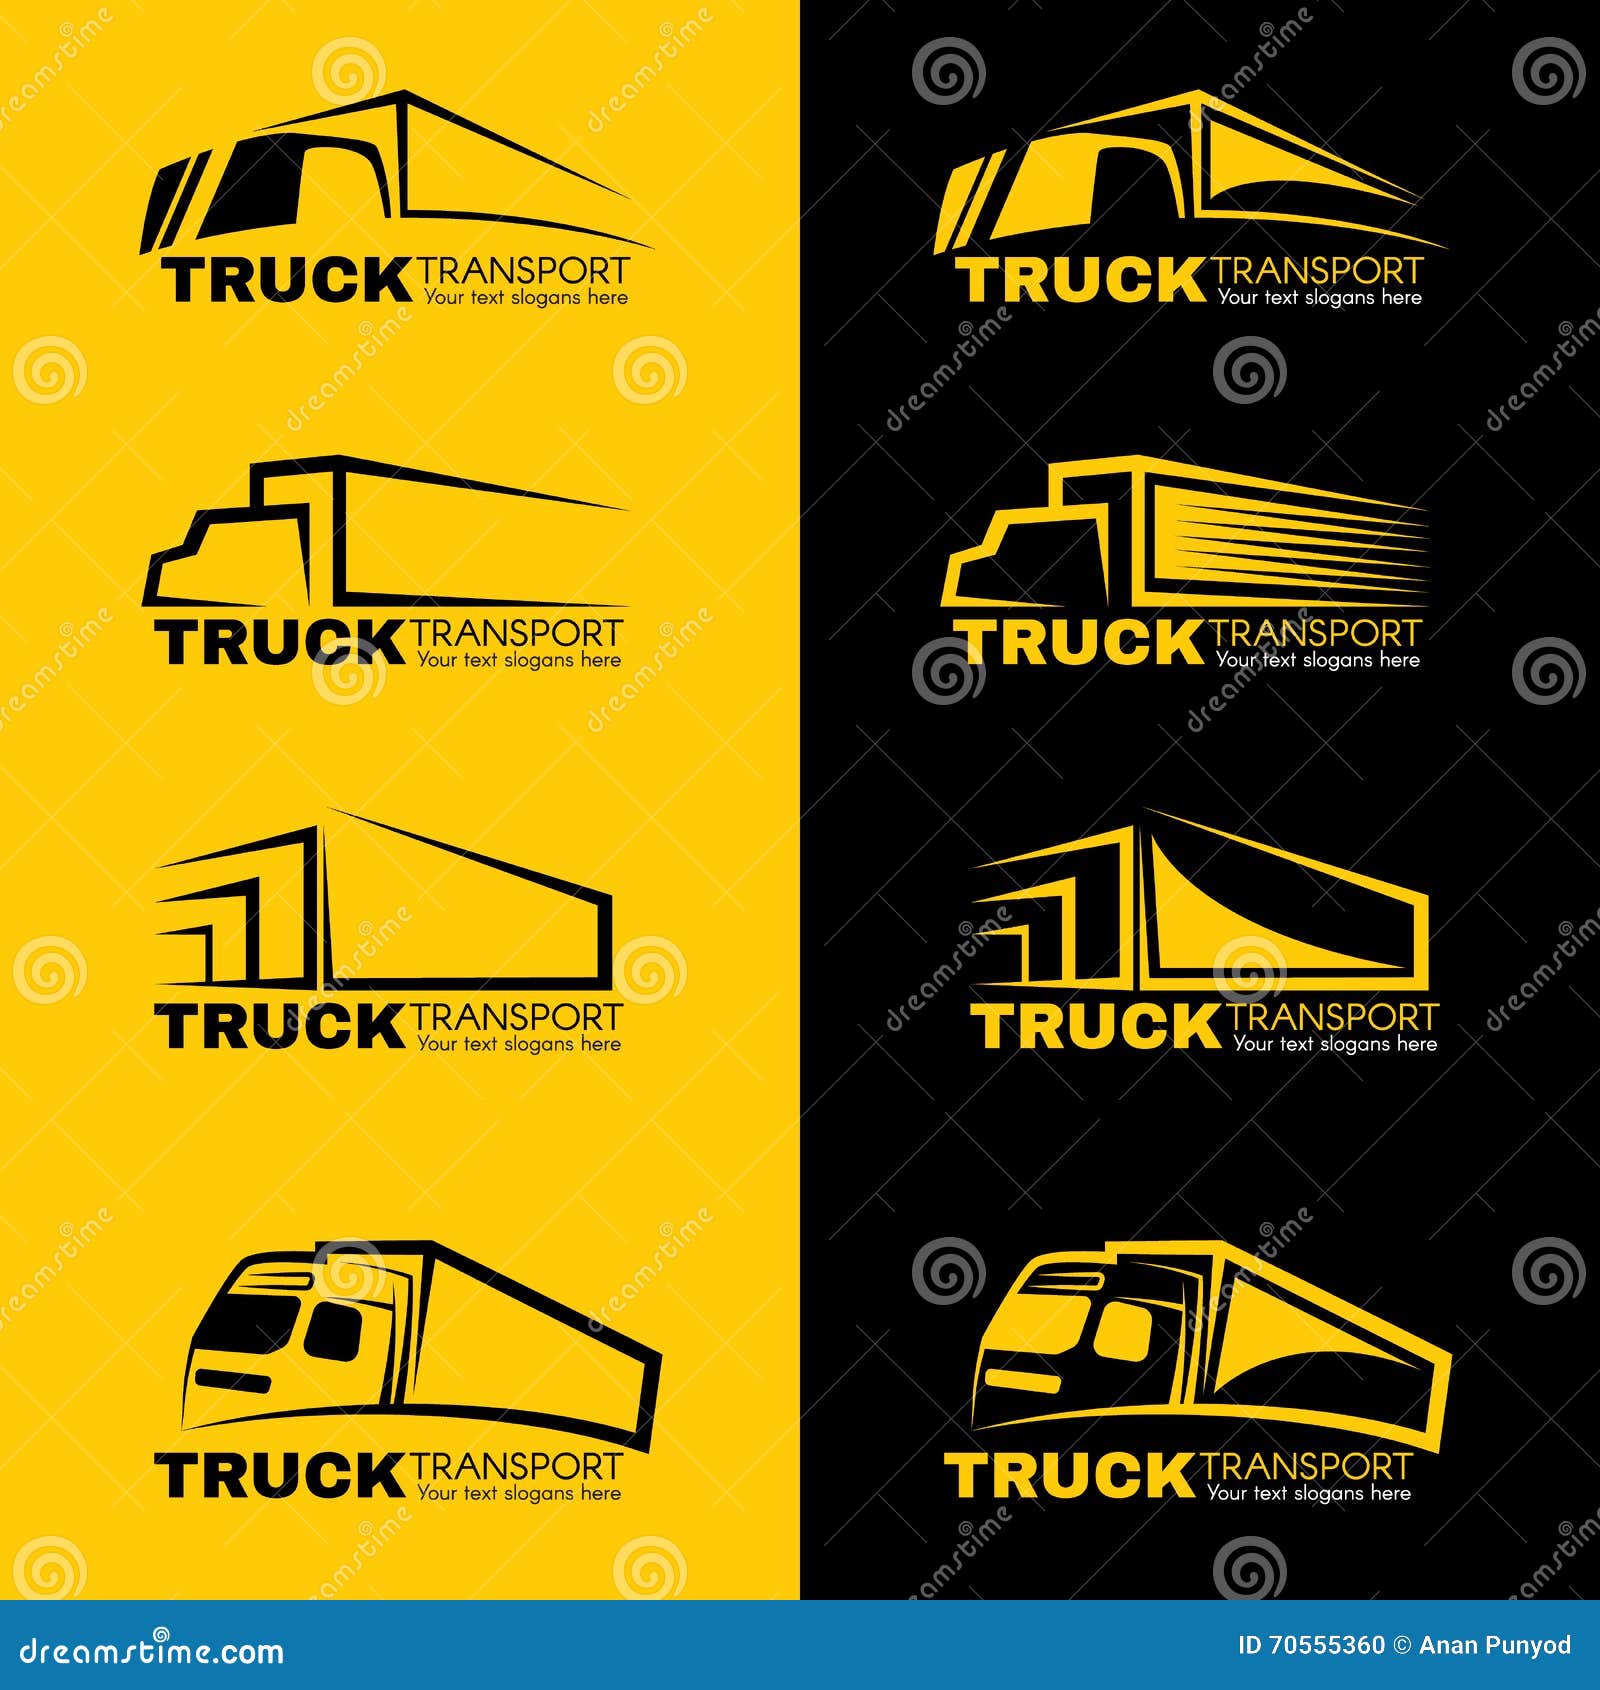 black and yellow truck transport logo  